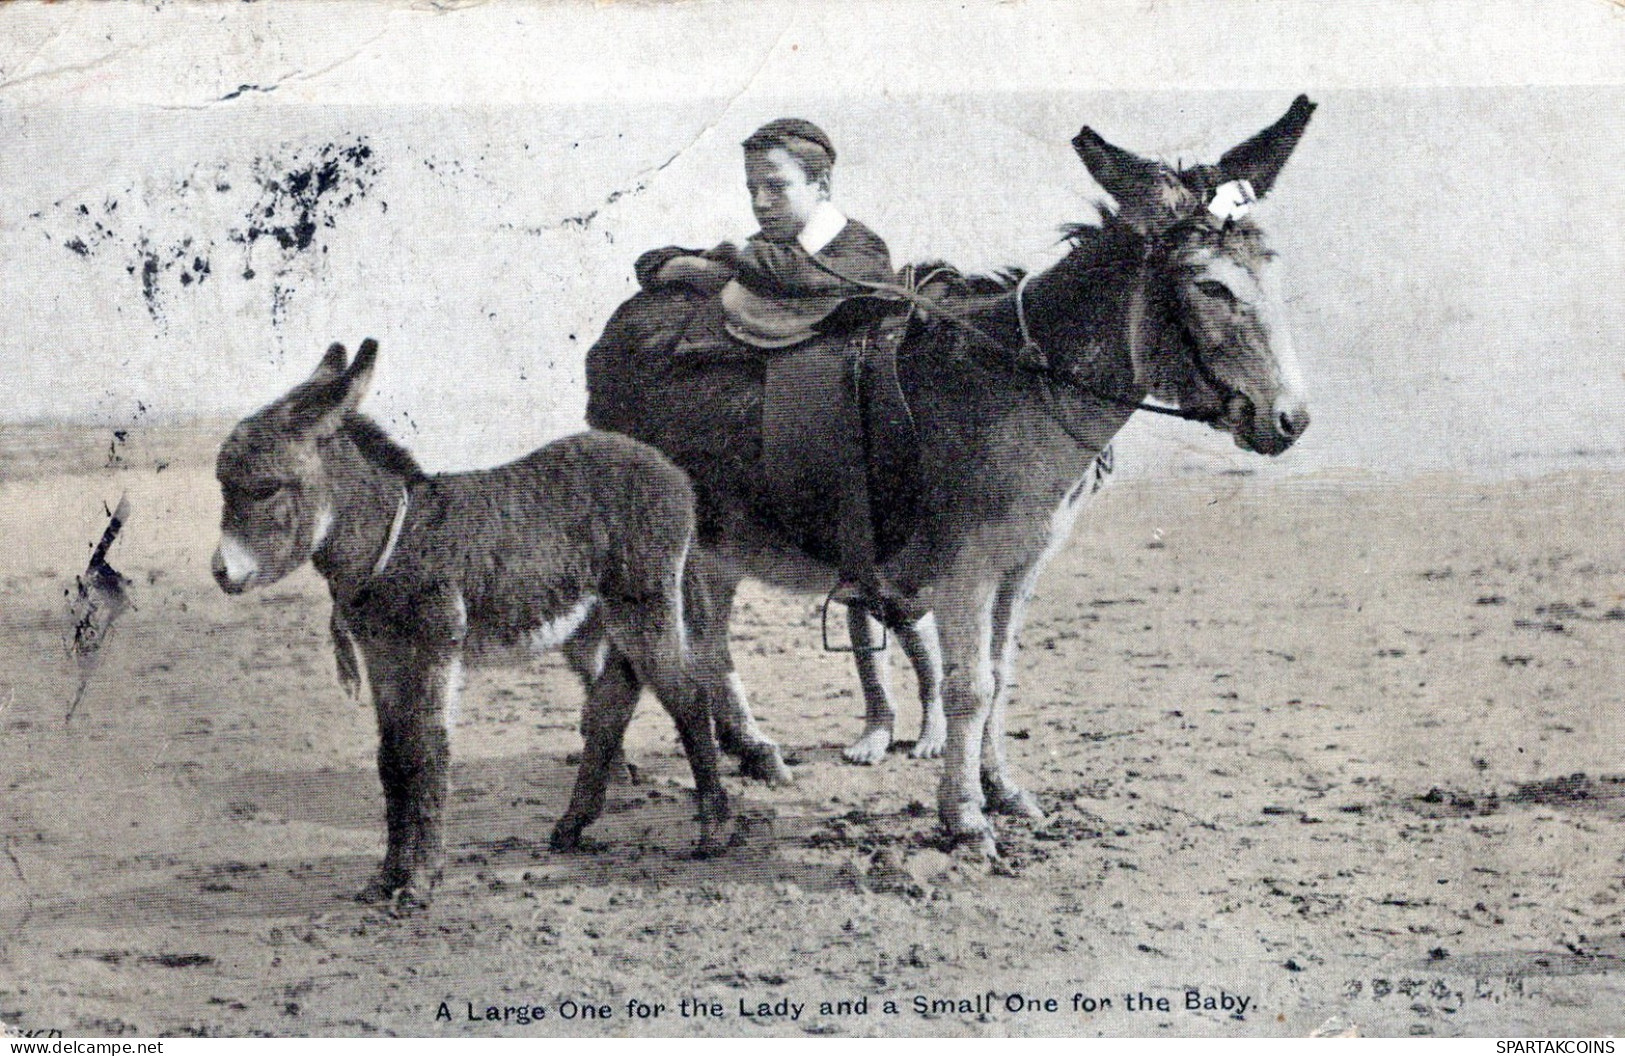 ÂNE Animaux Enfants Vintage Antique CPA Carte Postale #PAA336.A - Donkeys